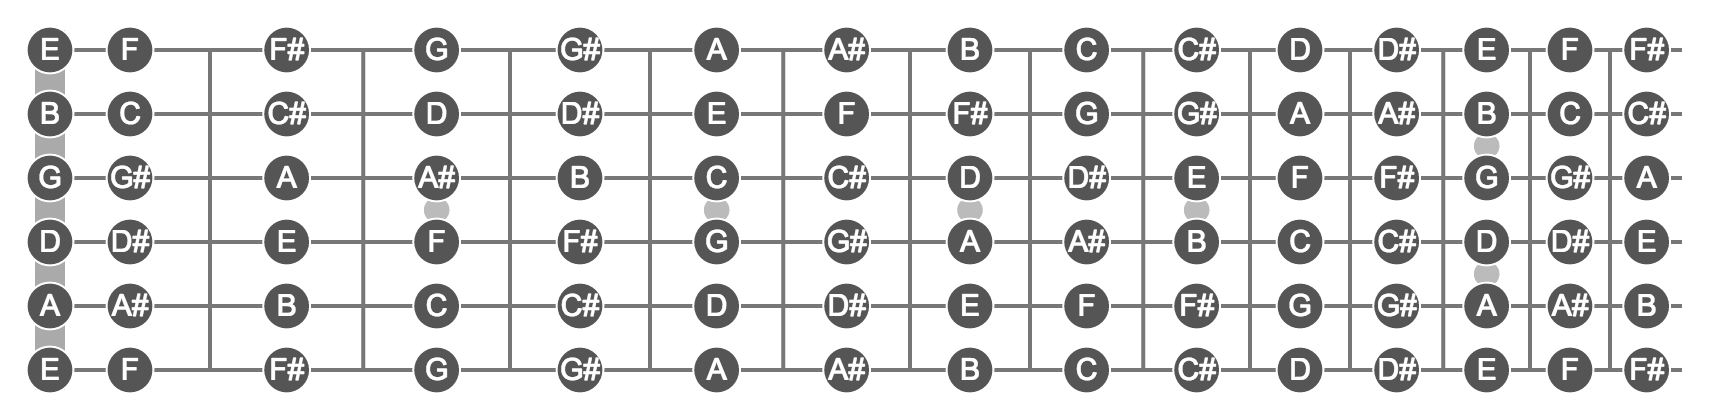 Guitar Neck Notes Chart